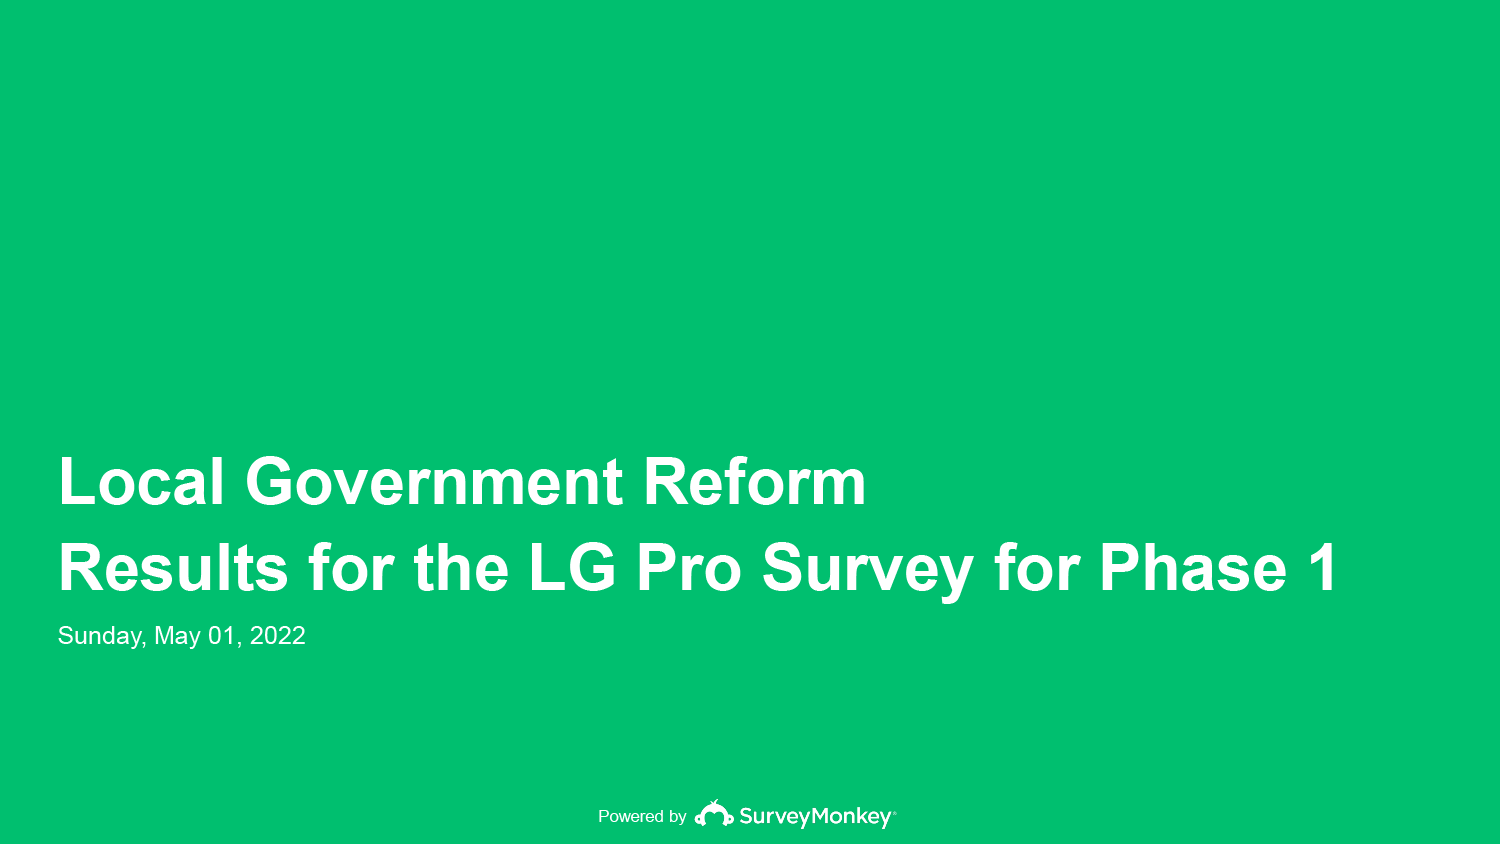 LG Pro Reform Survey Results